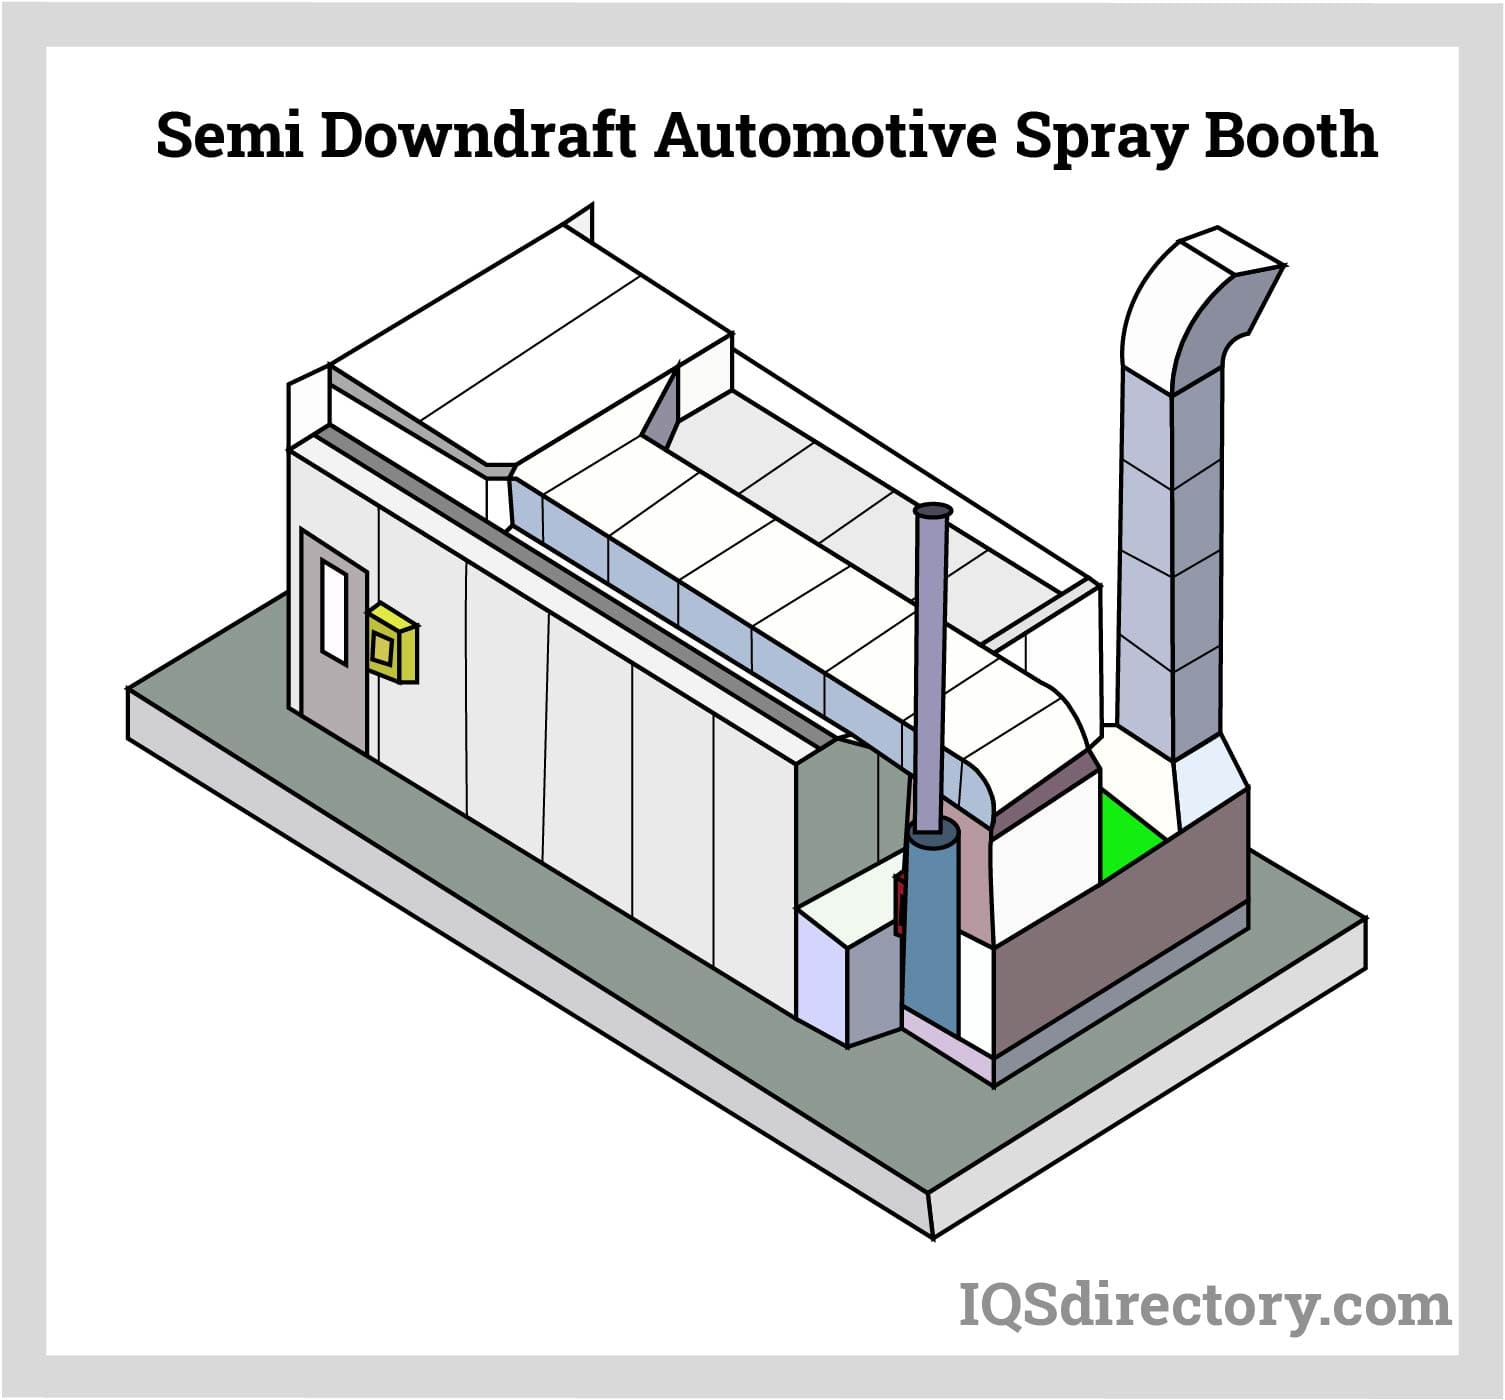 Semi Downdraft Automotive Spray Booth